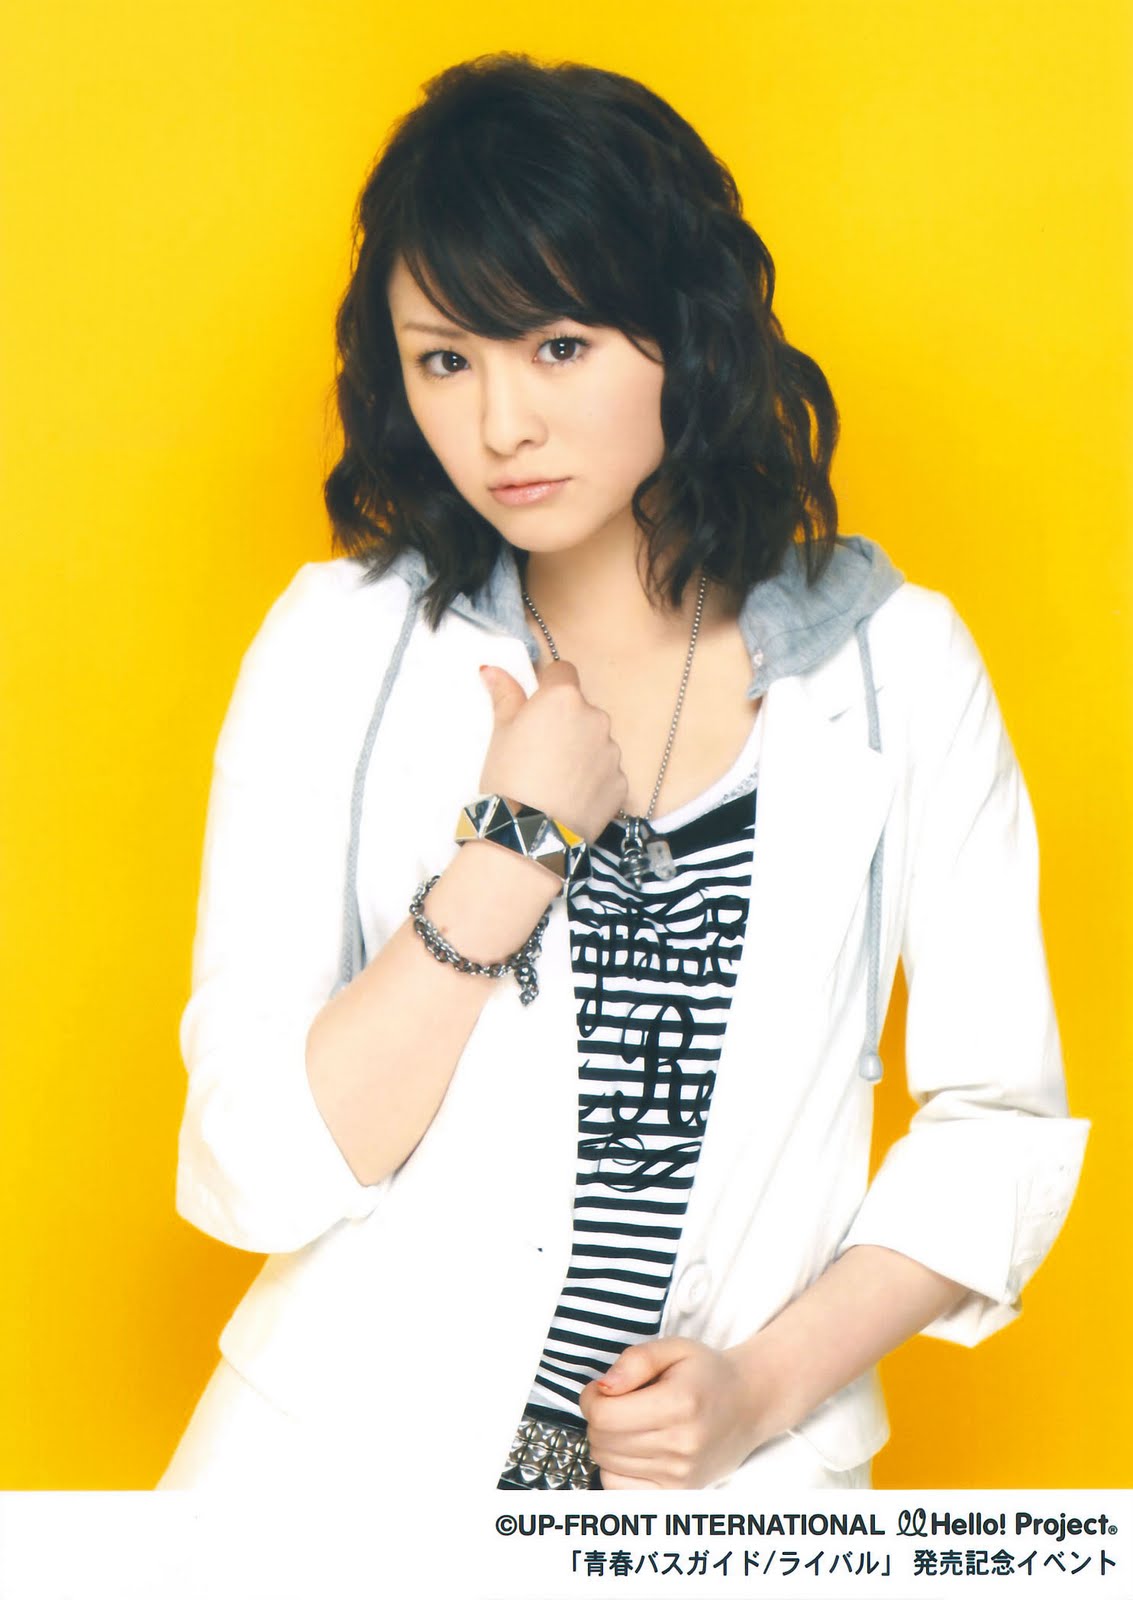 Kira's Blog: Picspam - Sugaya Risako1133 x 1600